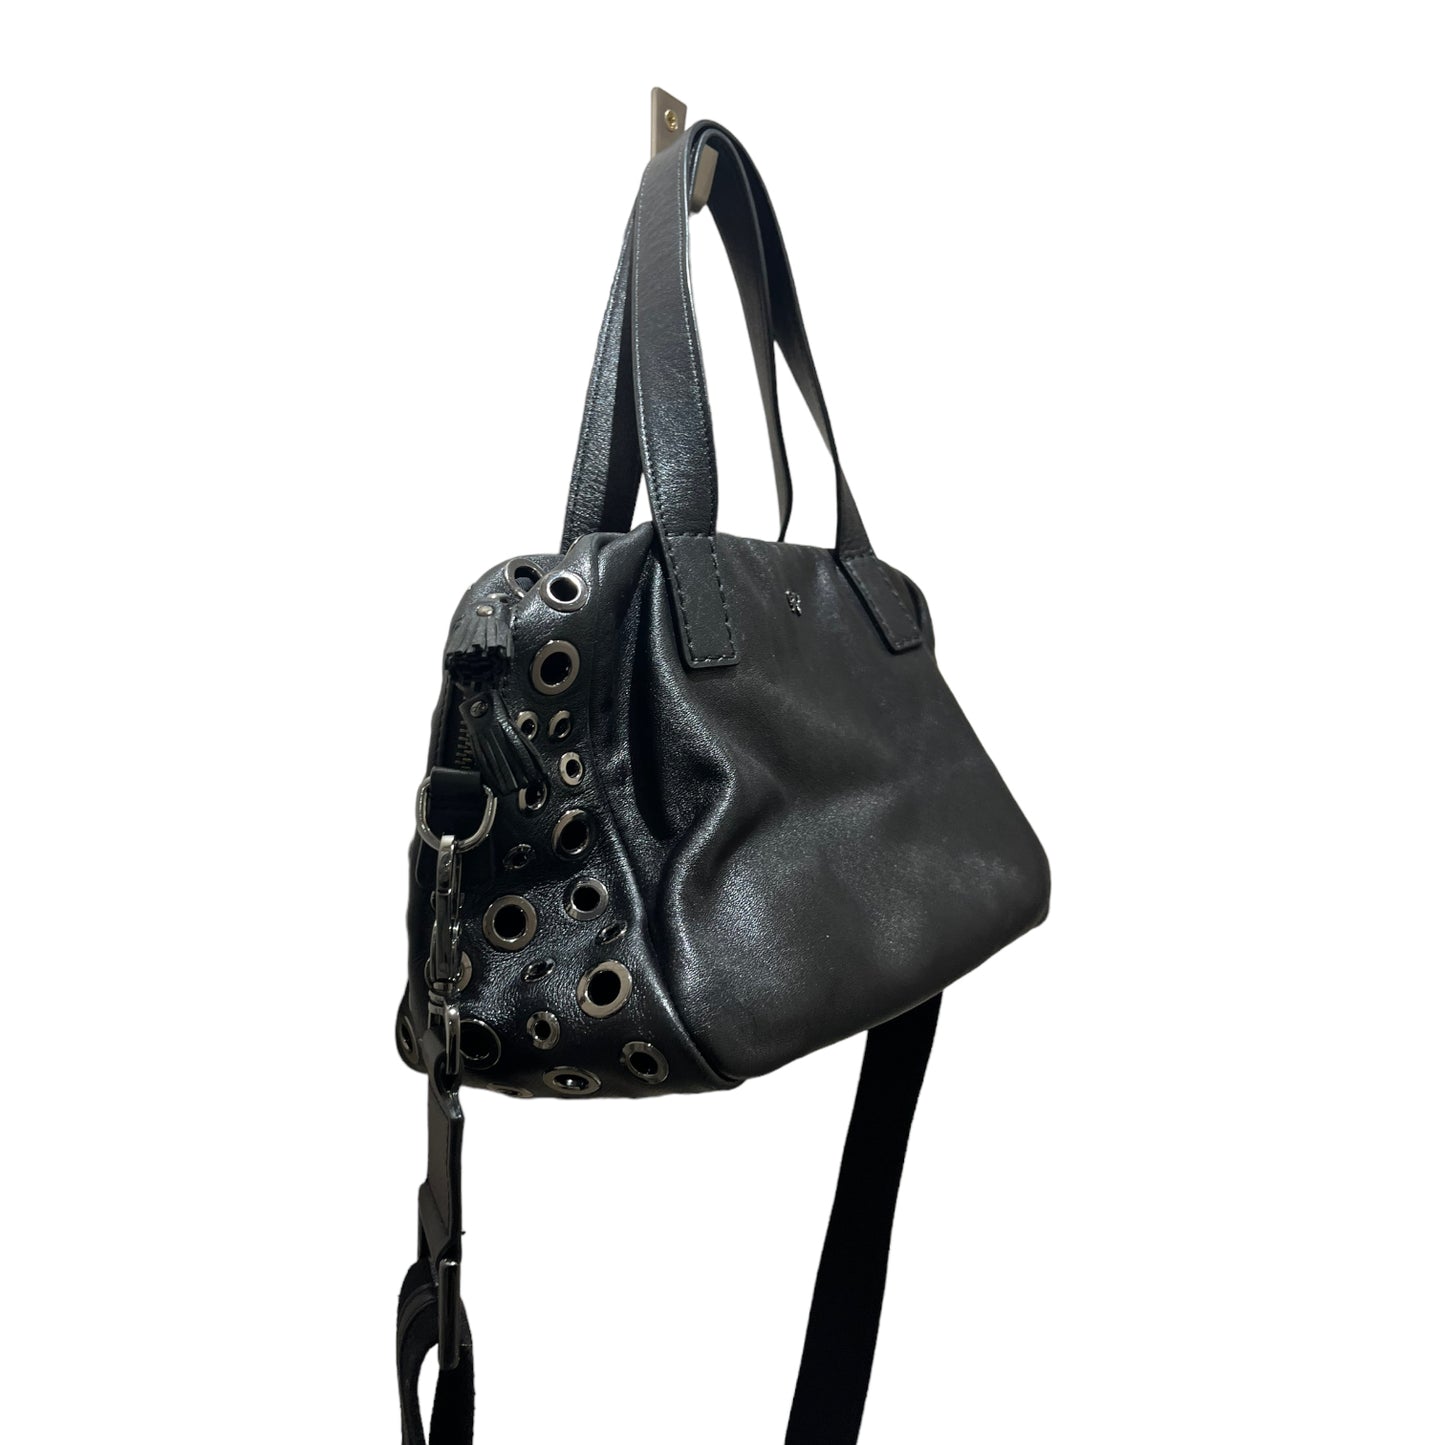 Anya Hindmarch Black Special Edition Bag